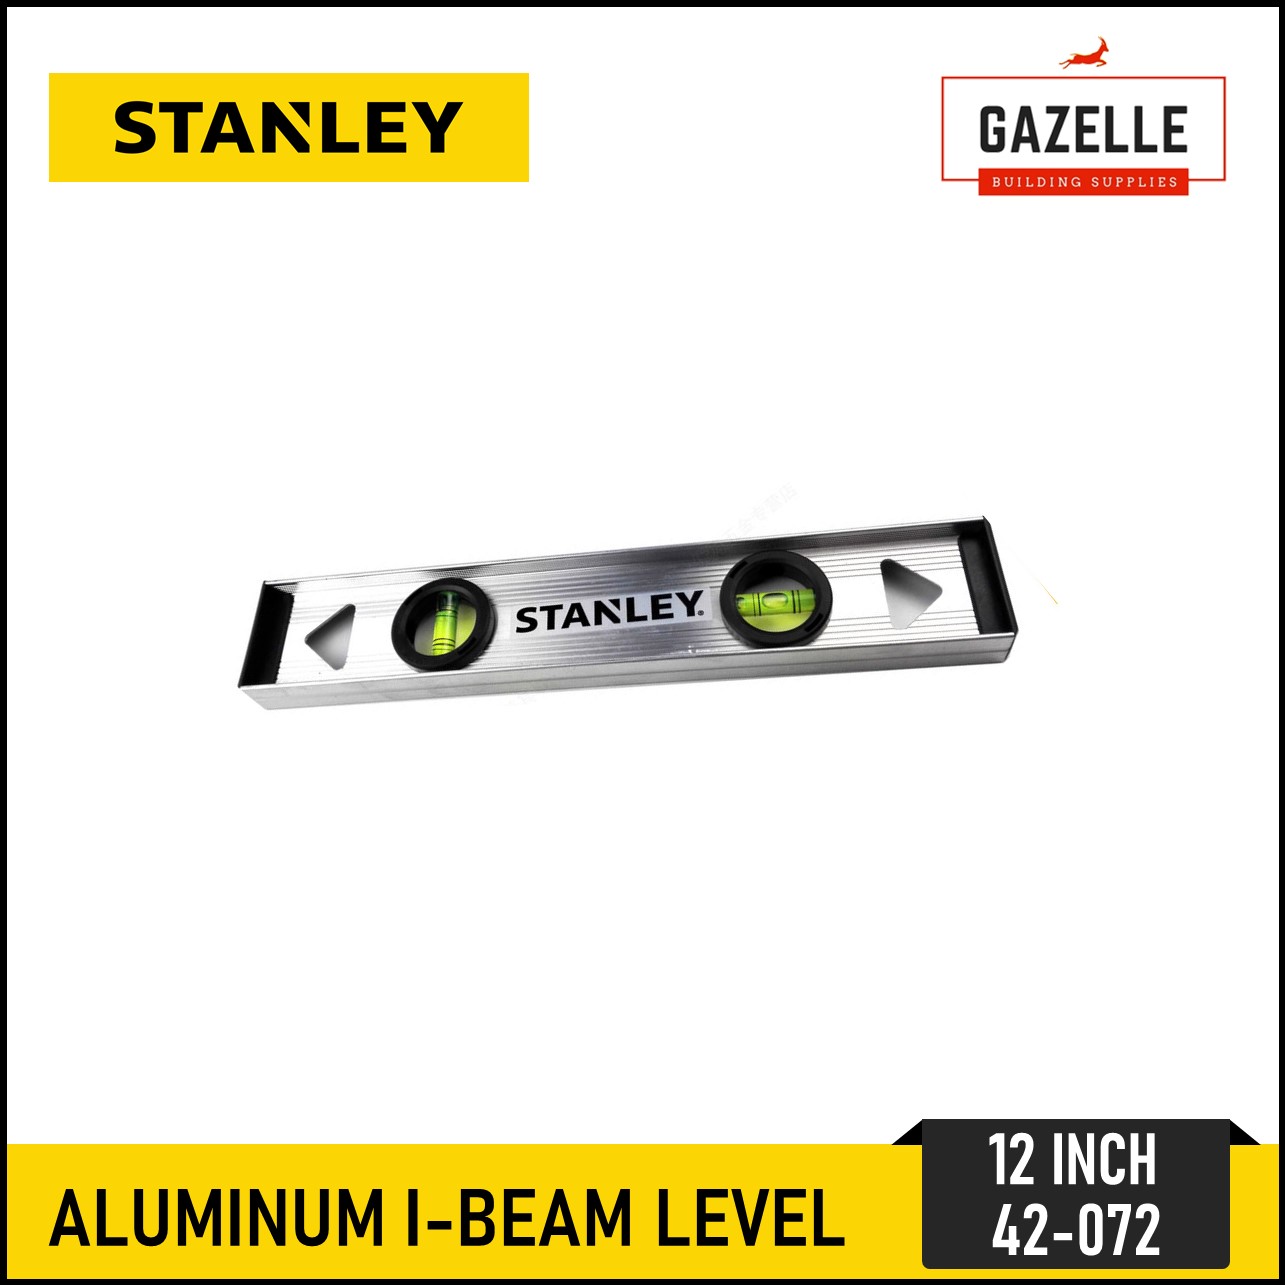 STANLEY 0-42-072 Aluminum spirit level with I profile